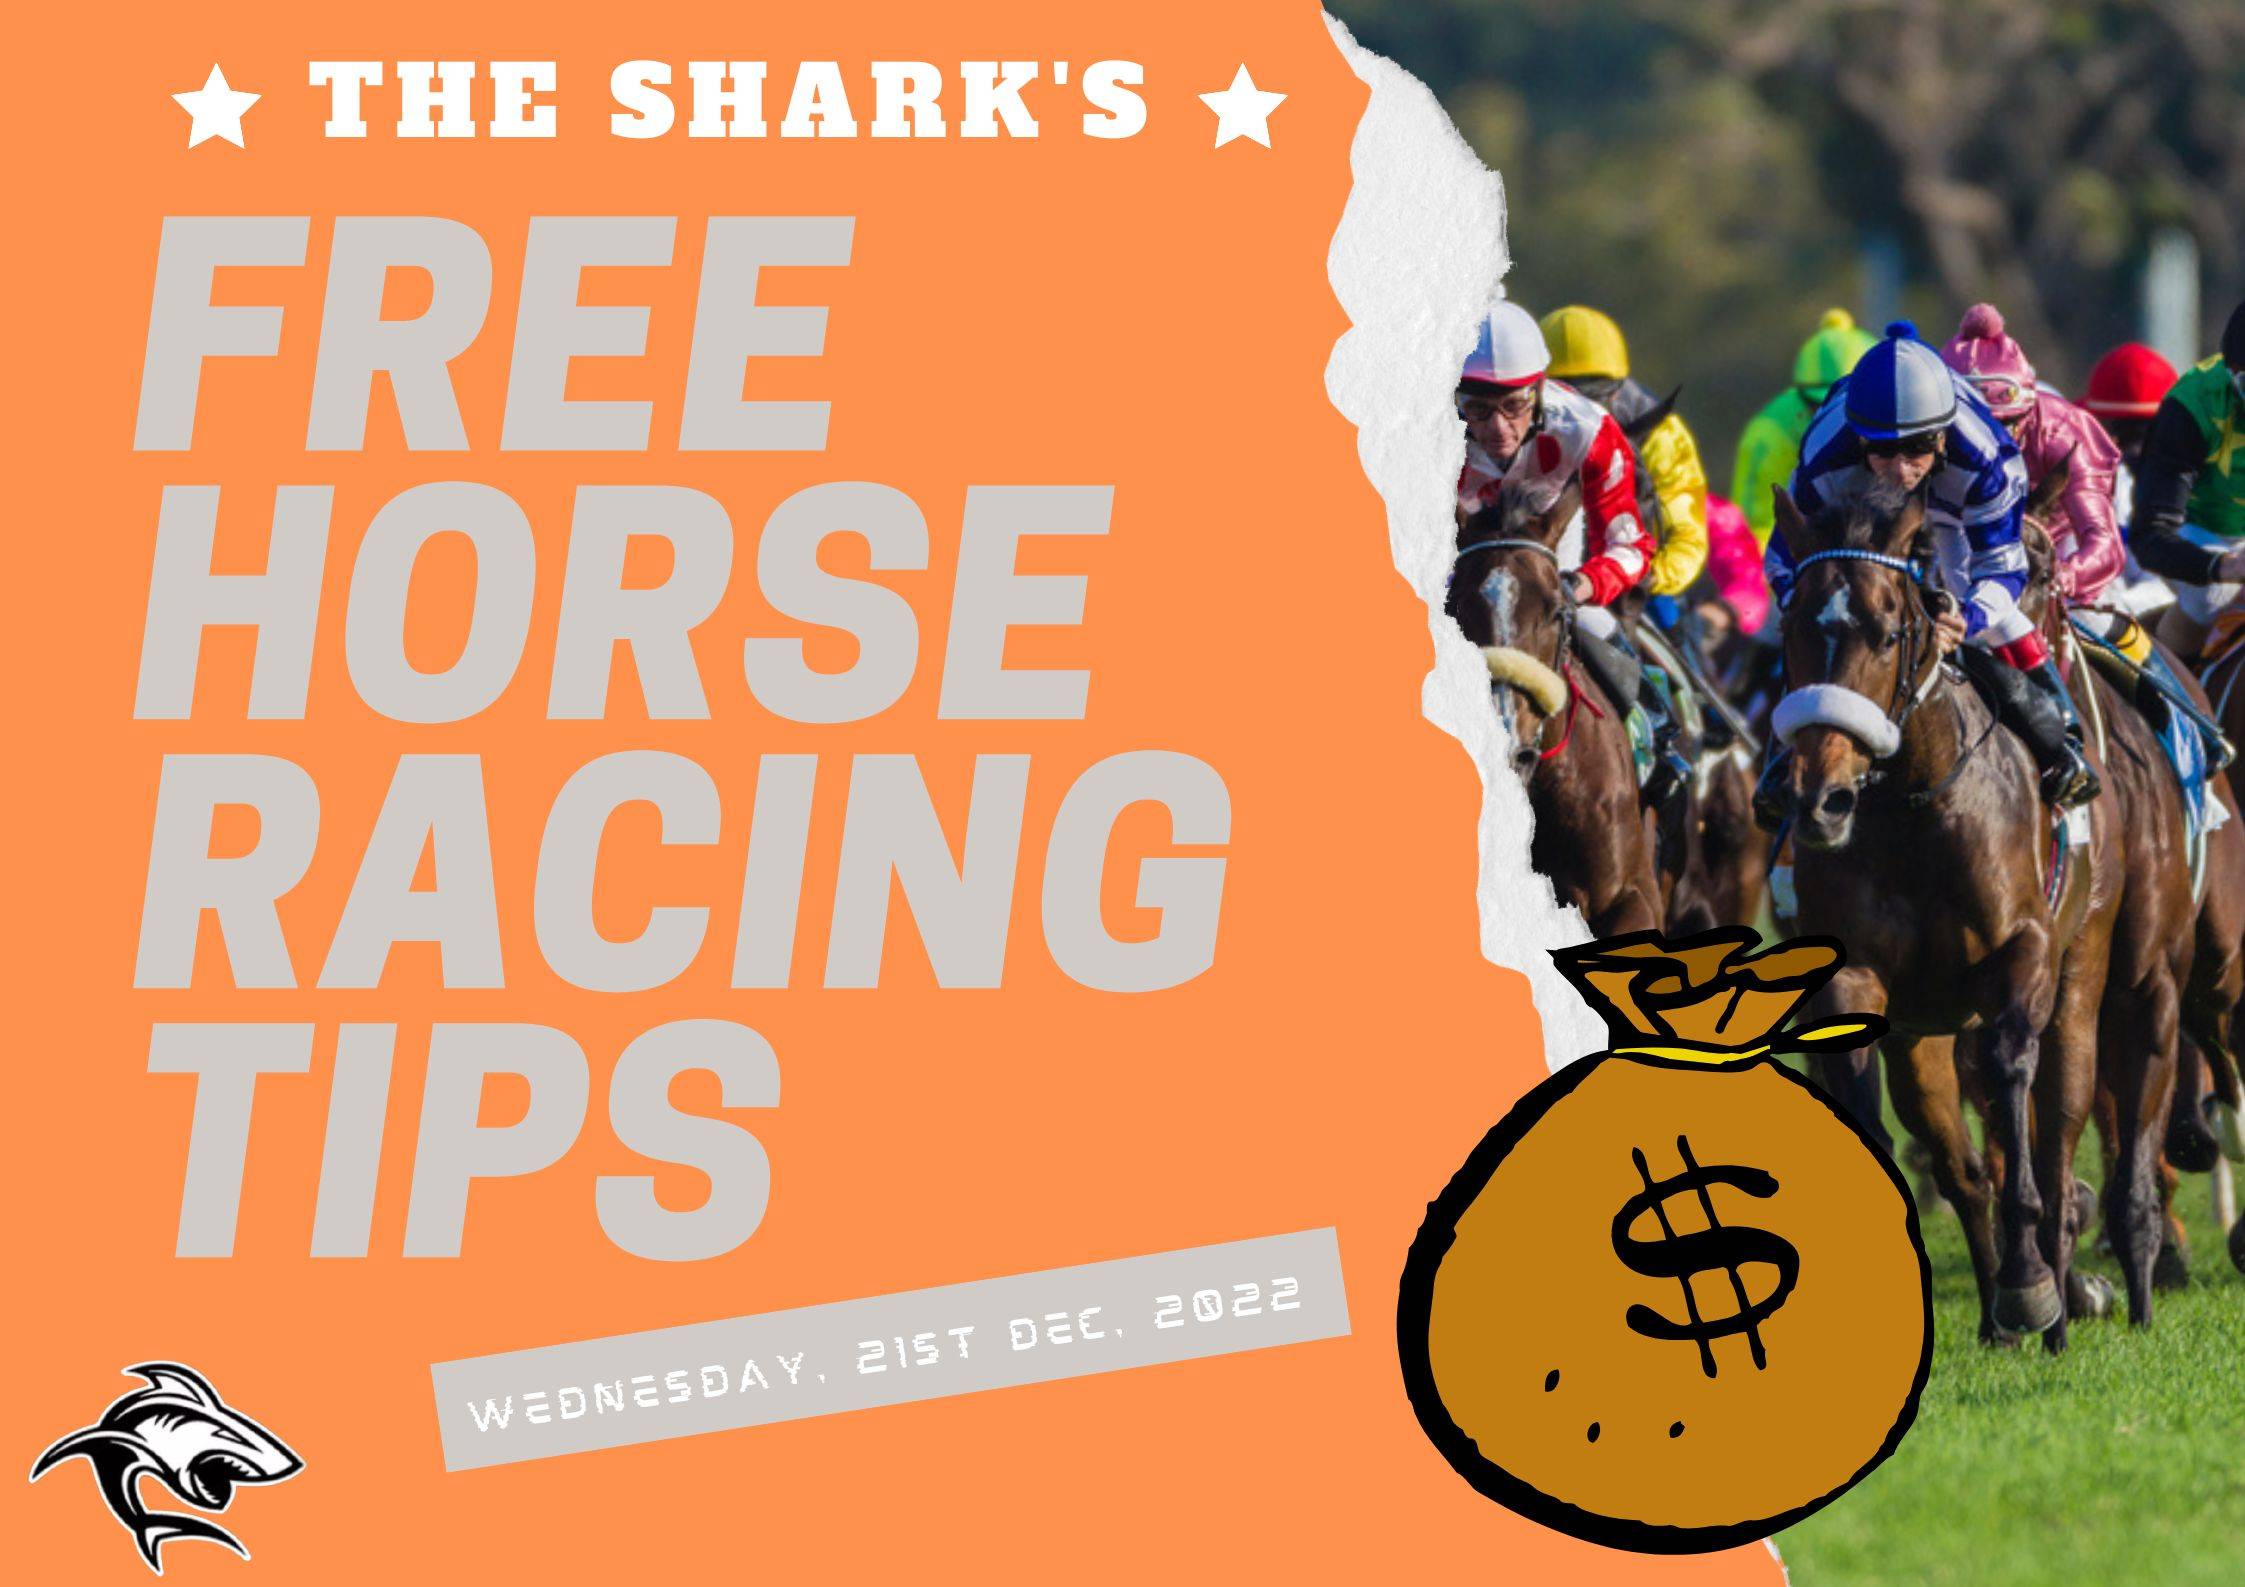 Free Horse Racing Tips - 21st Dec